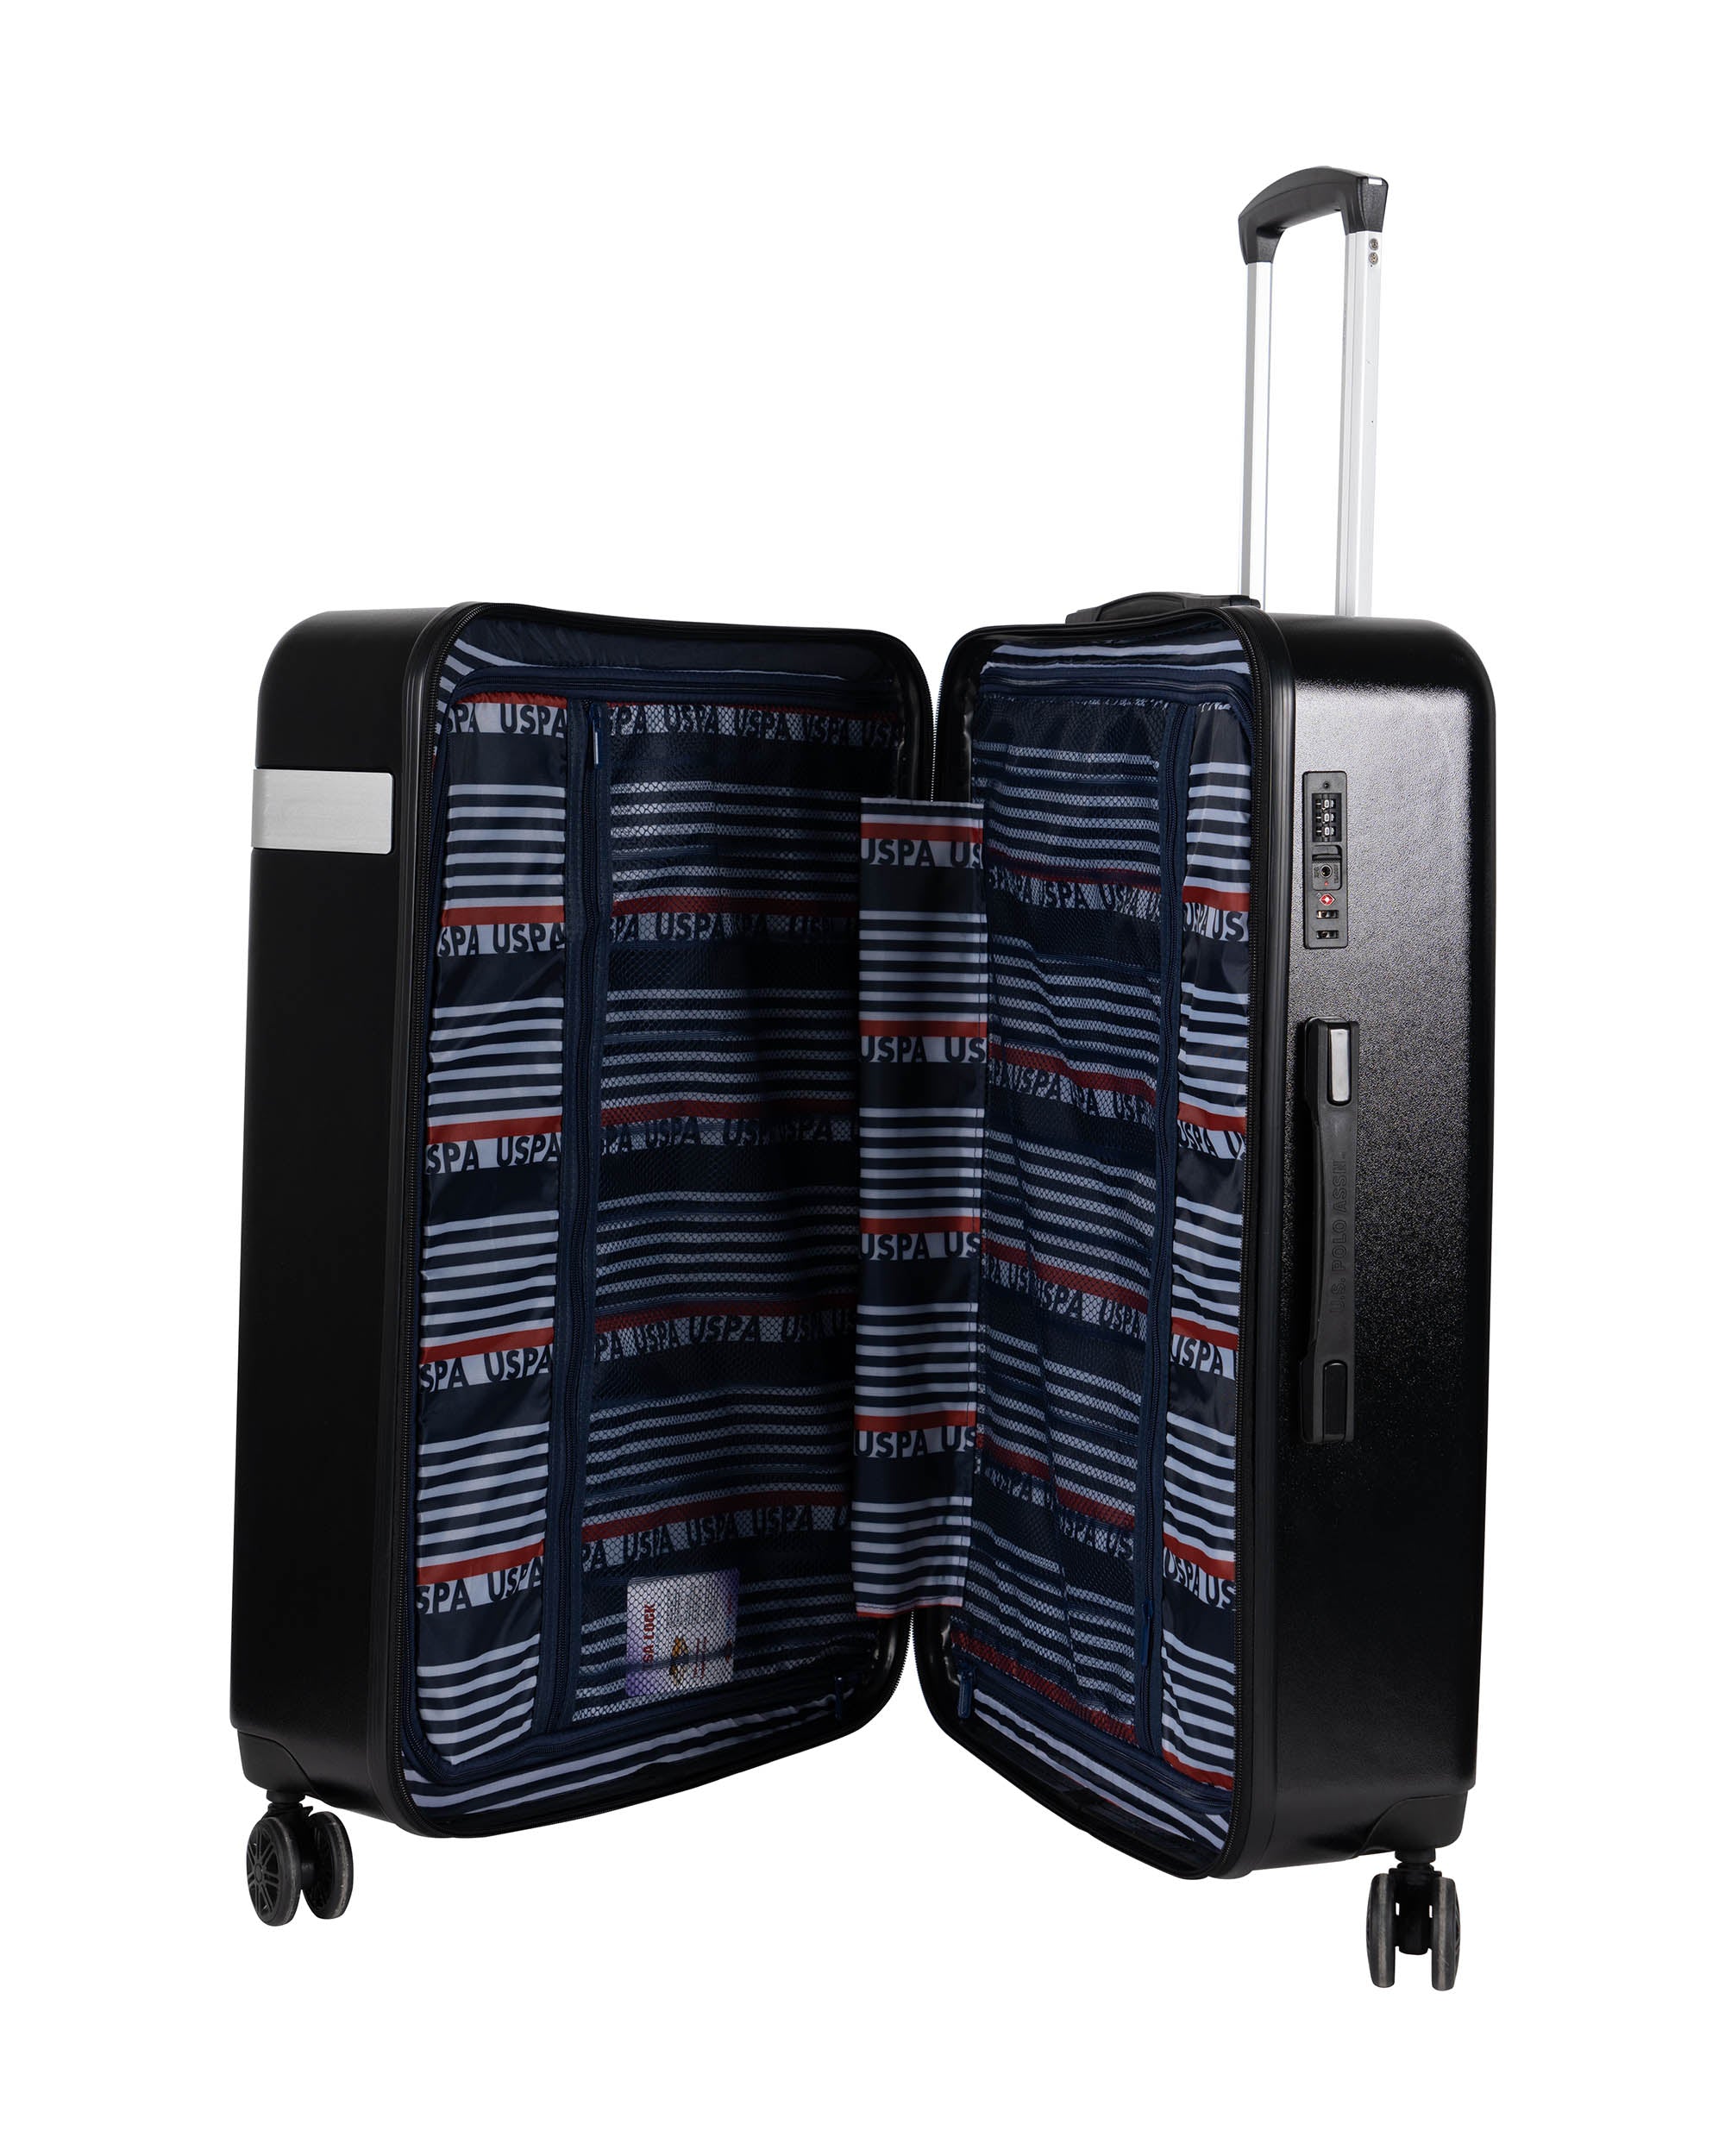 U.S. Polo Assn. Black Large Luggage